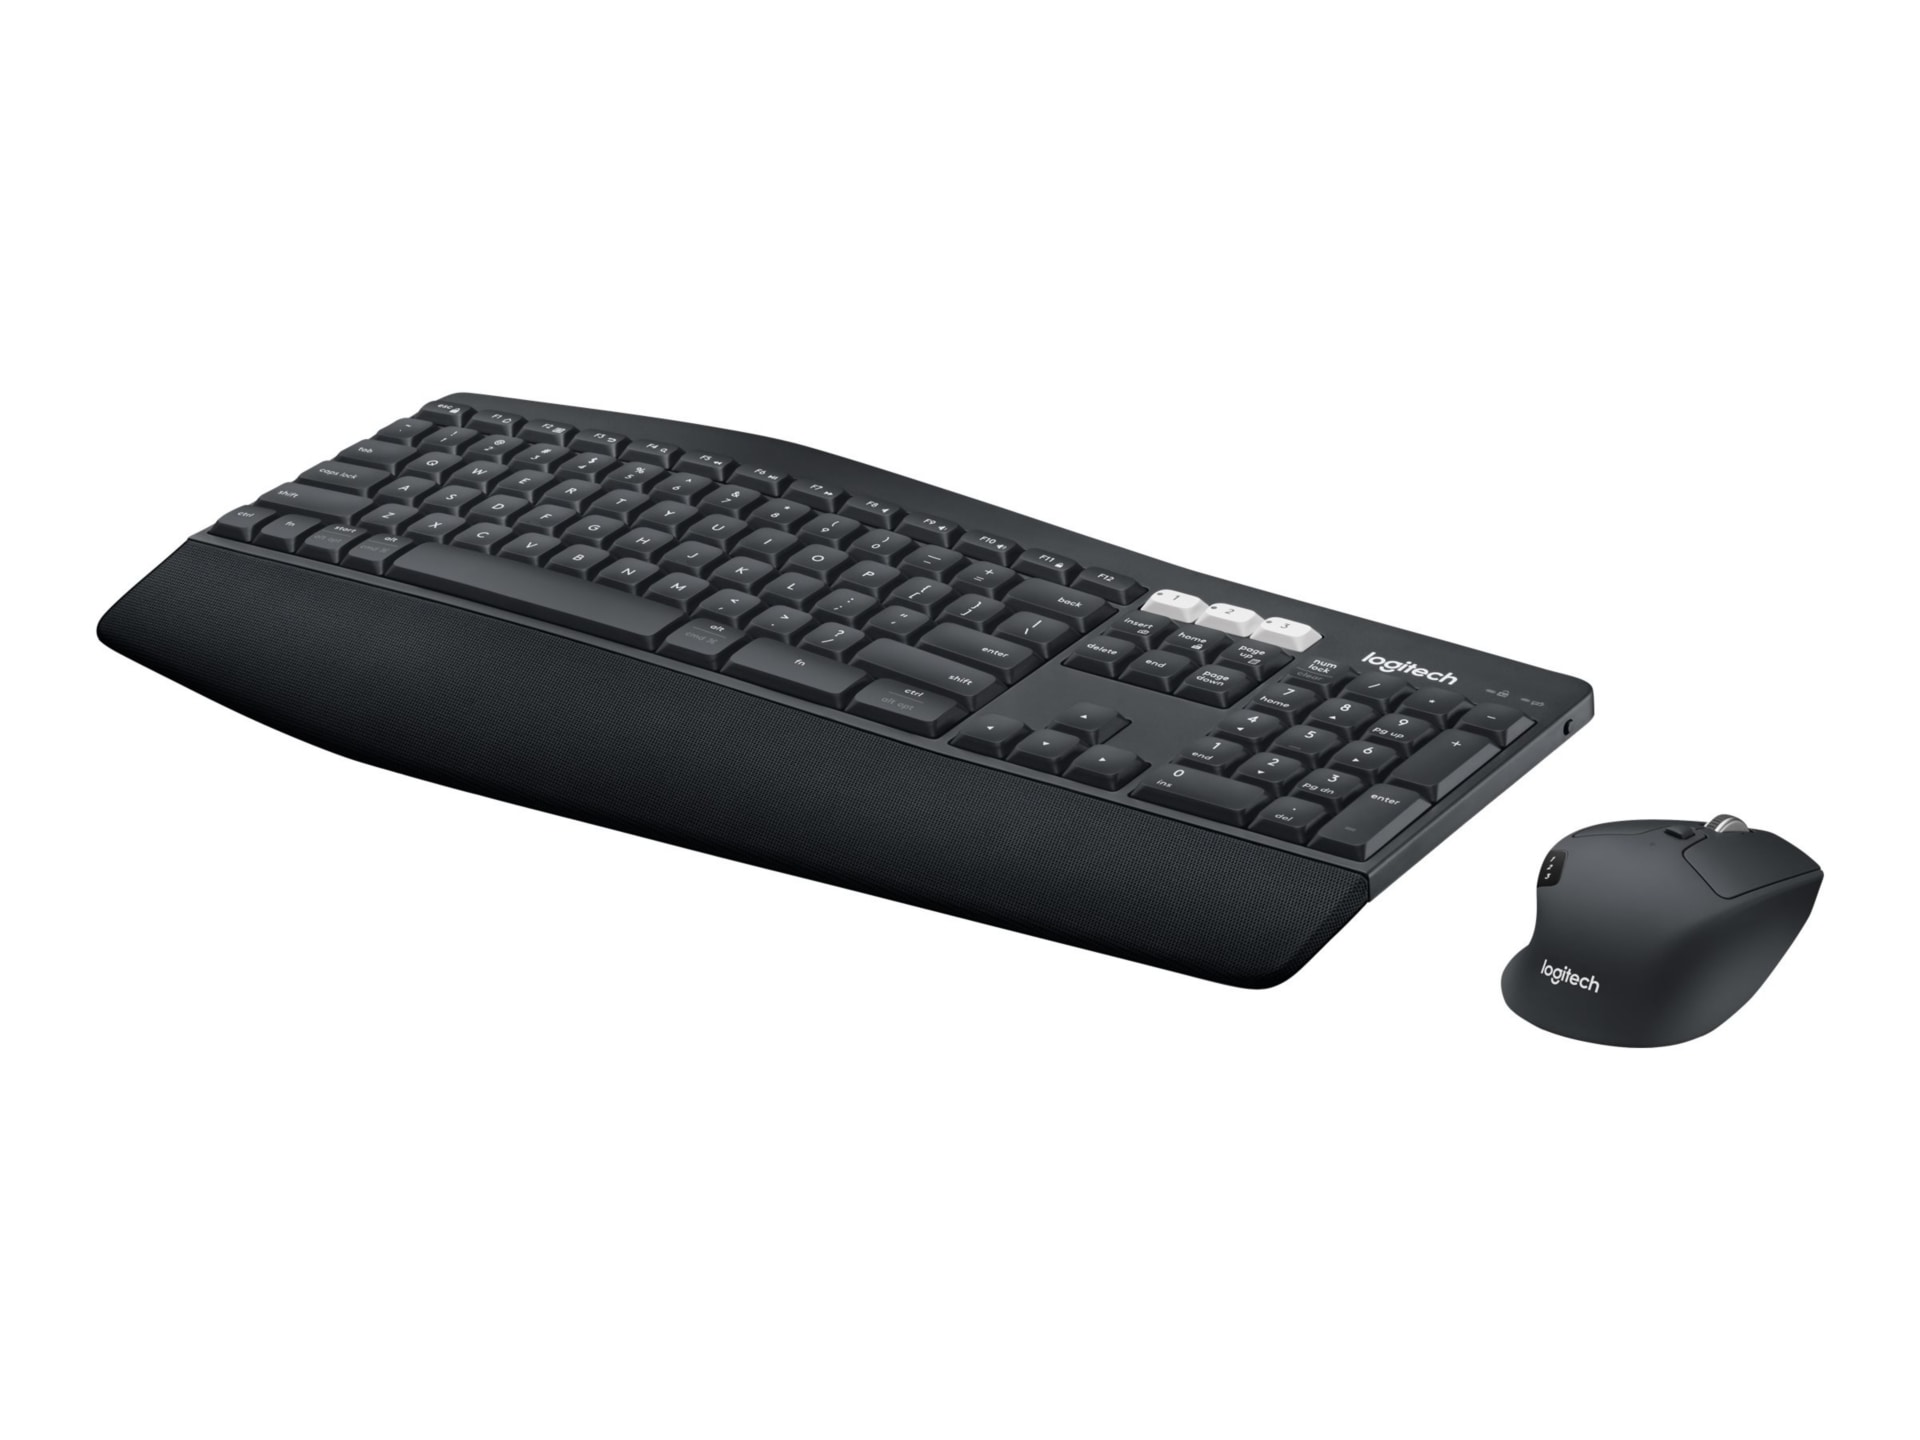 Logitech MK850 Performance - keyboard and mouse set - 920-008219 - & Mouse Bundles CDW.com